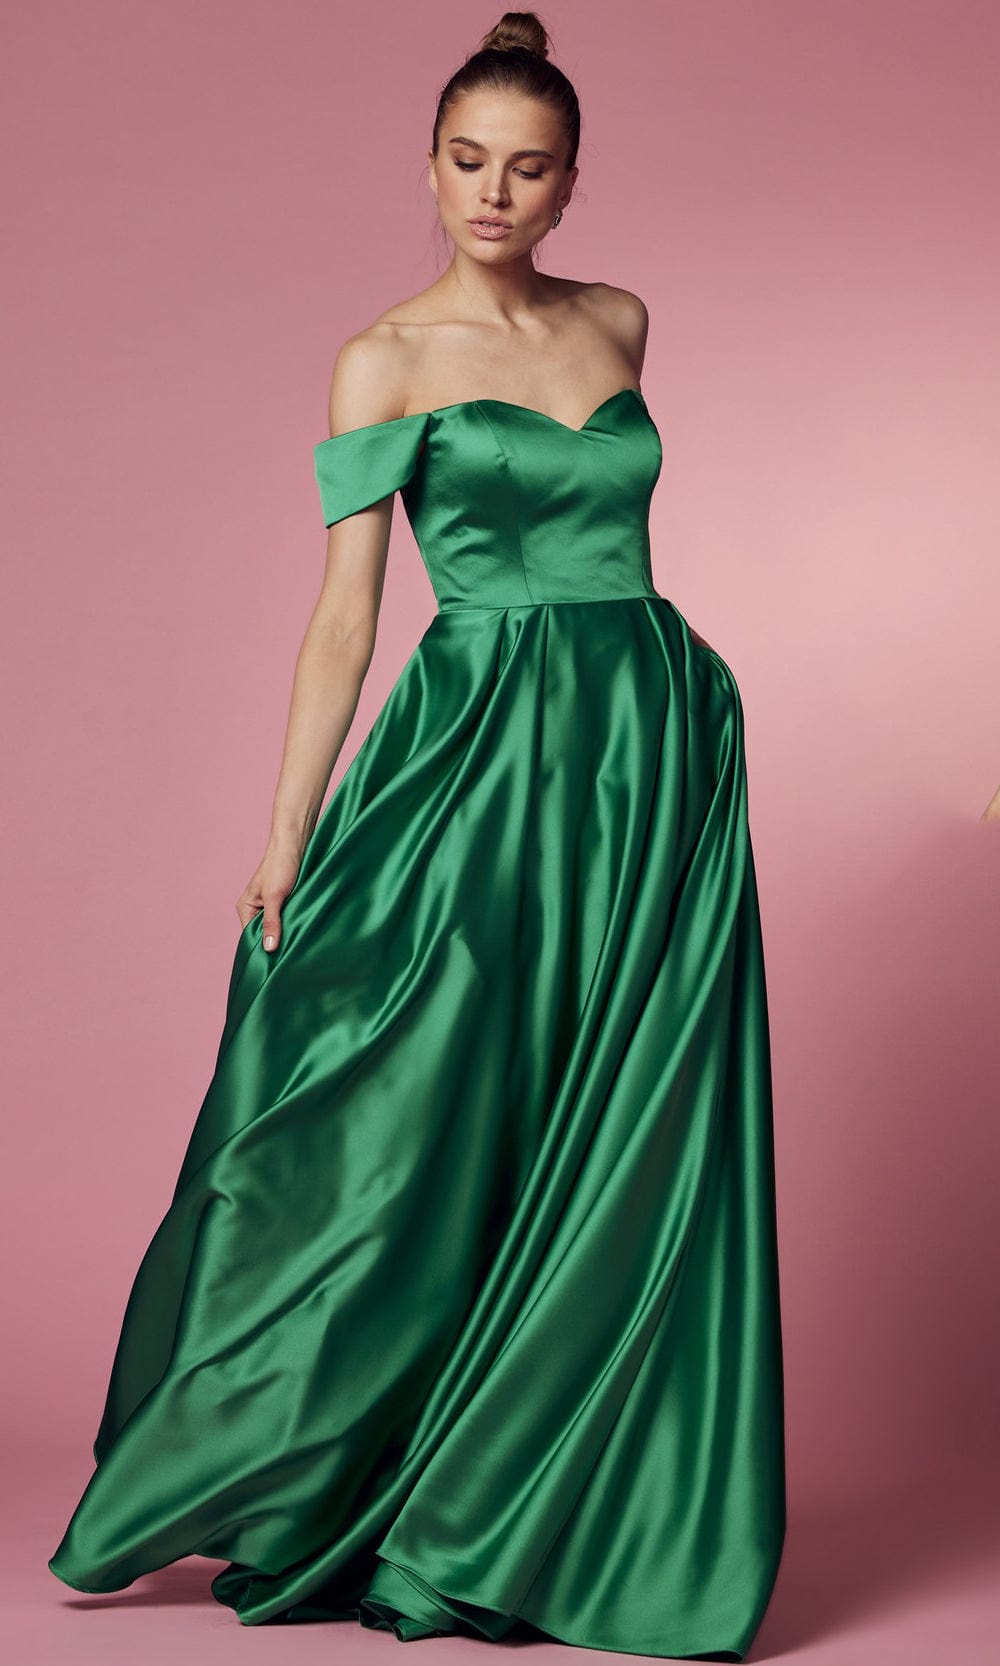 Nox Anabel R1032 - Off Shoulder A-Line Prom Dress Prom Dresses 2 / Emerald Green